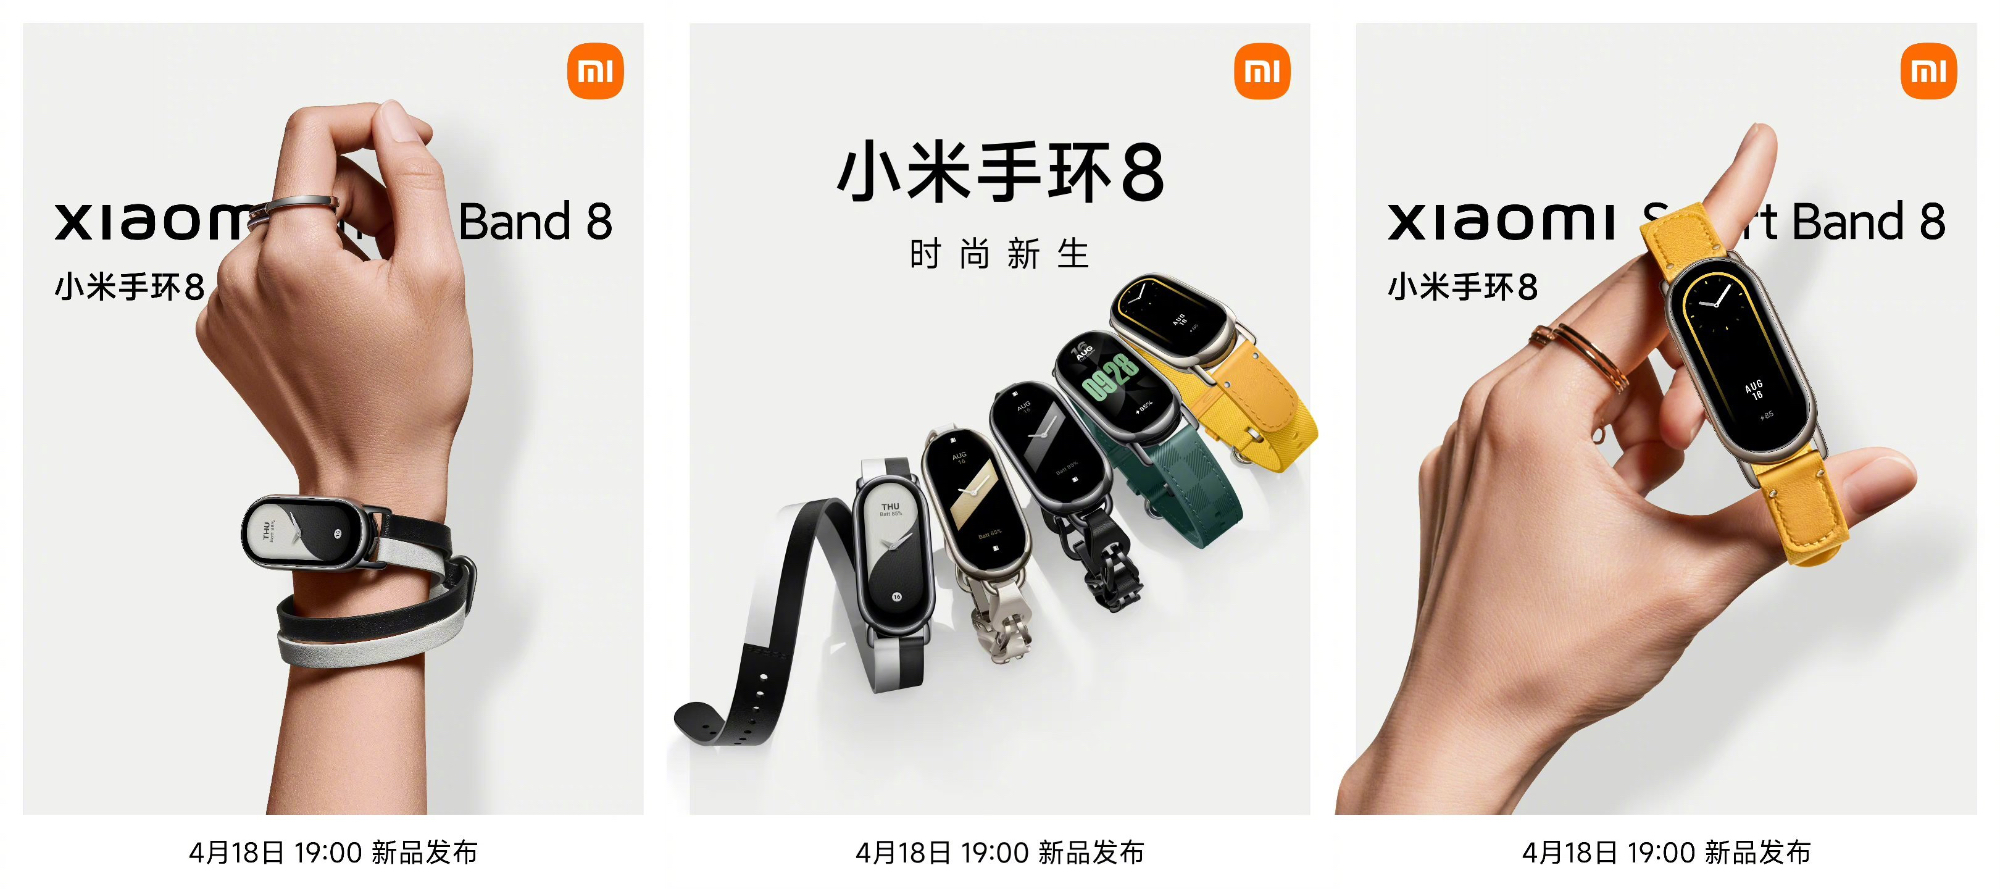 Xiaomi band 8 актив. Xiaomi Smart Band 8. Постер Xiaomi mi Band 8. Xiaomi Smart Band 8 расшифровка значков. Smart Band 8 коробка.